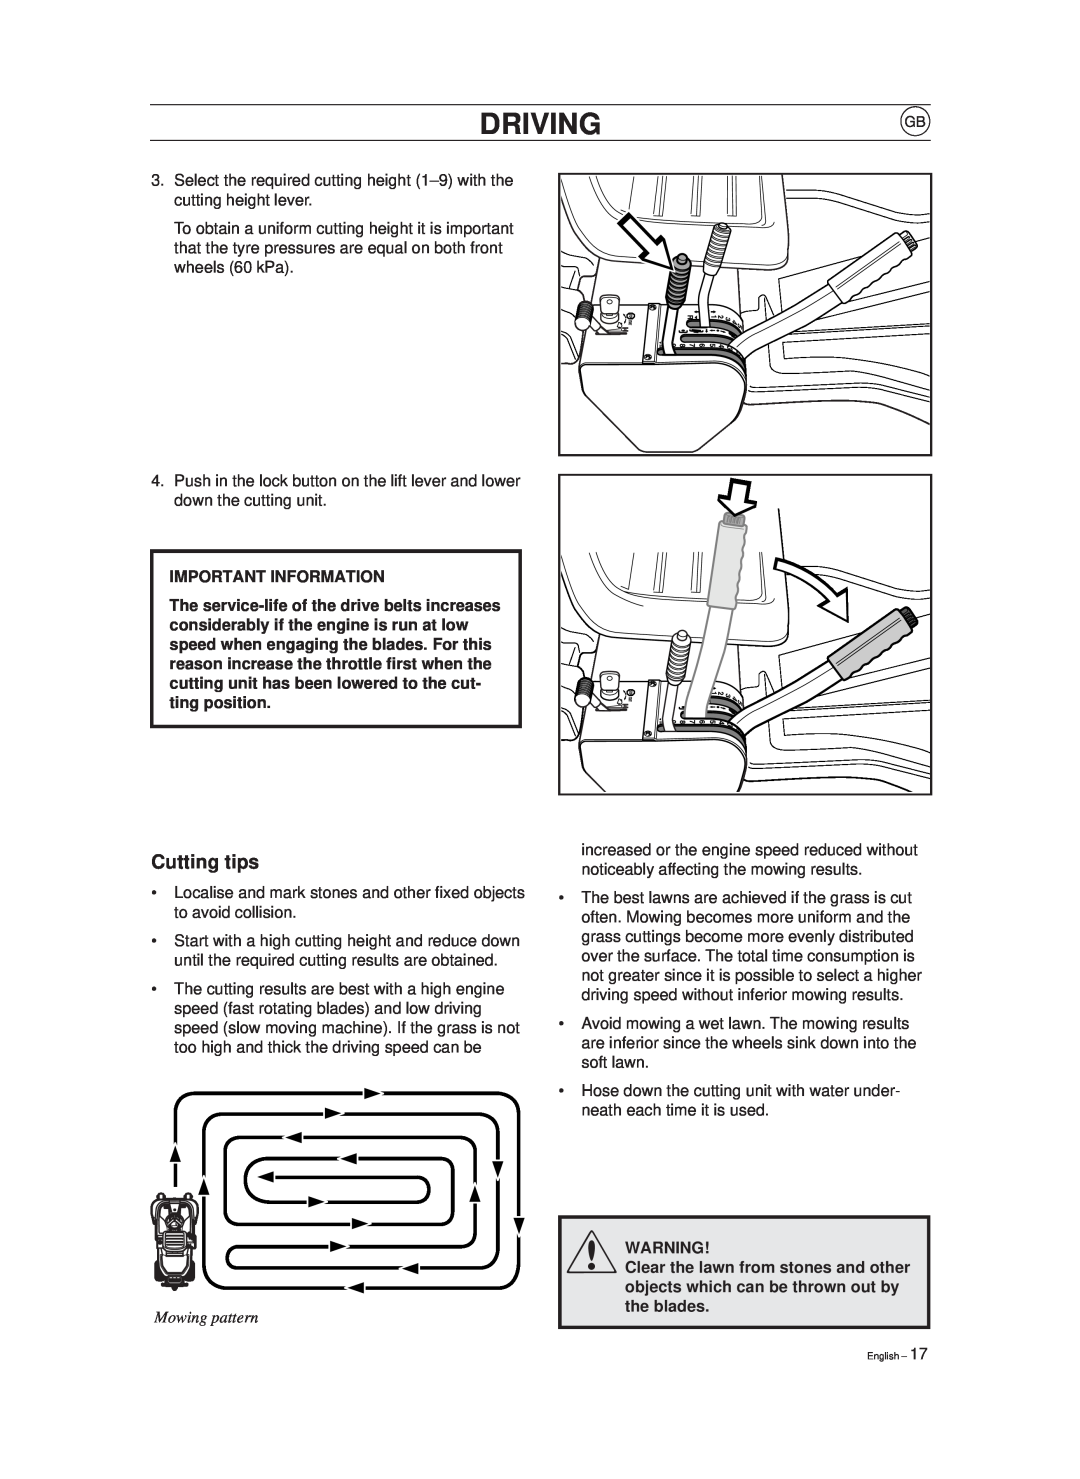 Husqvarna 970, 850 manual Cutting tips, Mowing pattern, Driving 